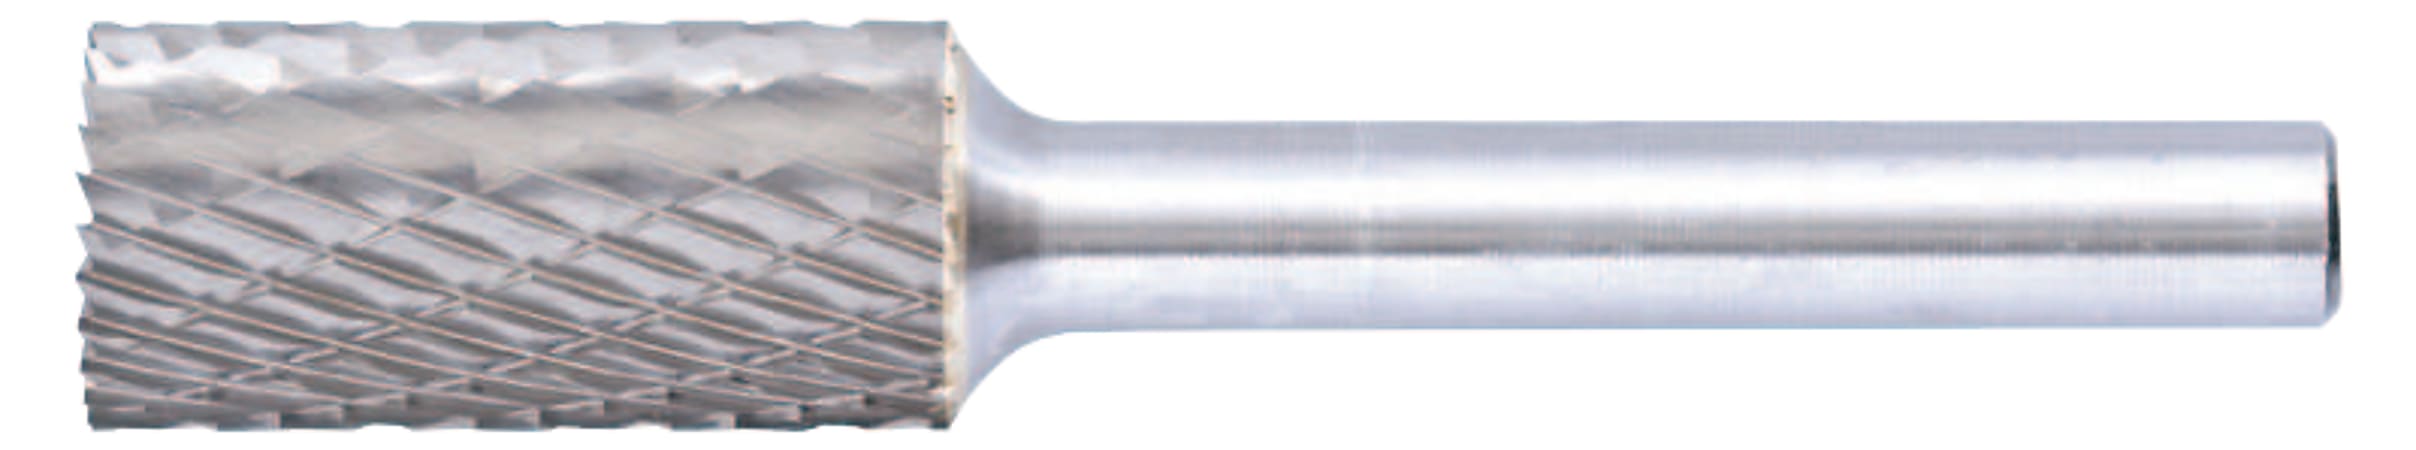 Carbide Bur Bit, 1/2 in diameter x 1 in Cut Length, 1/4 in Shank, Alternate Diamond